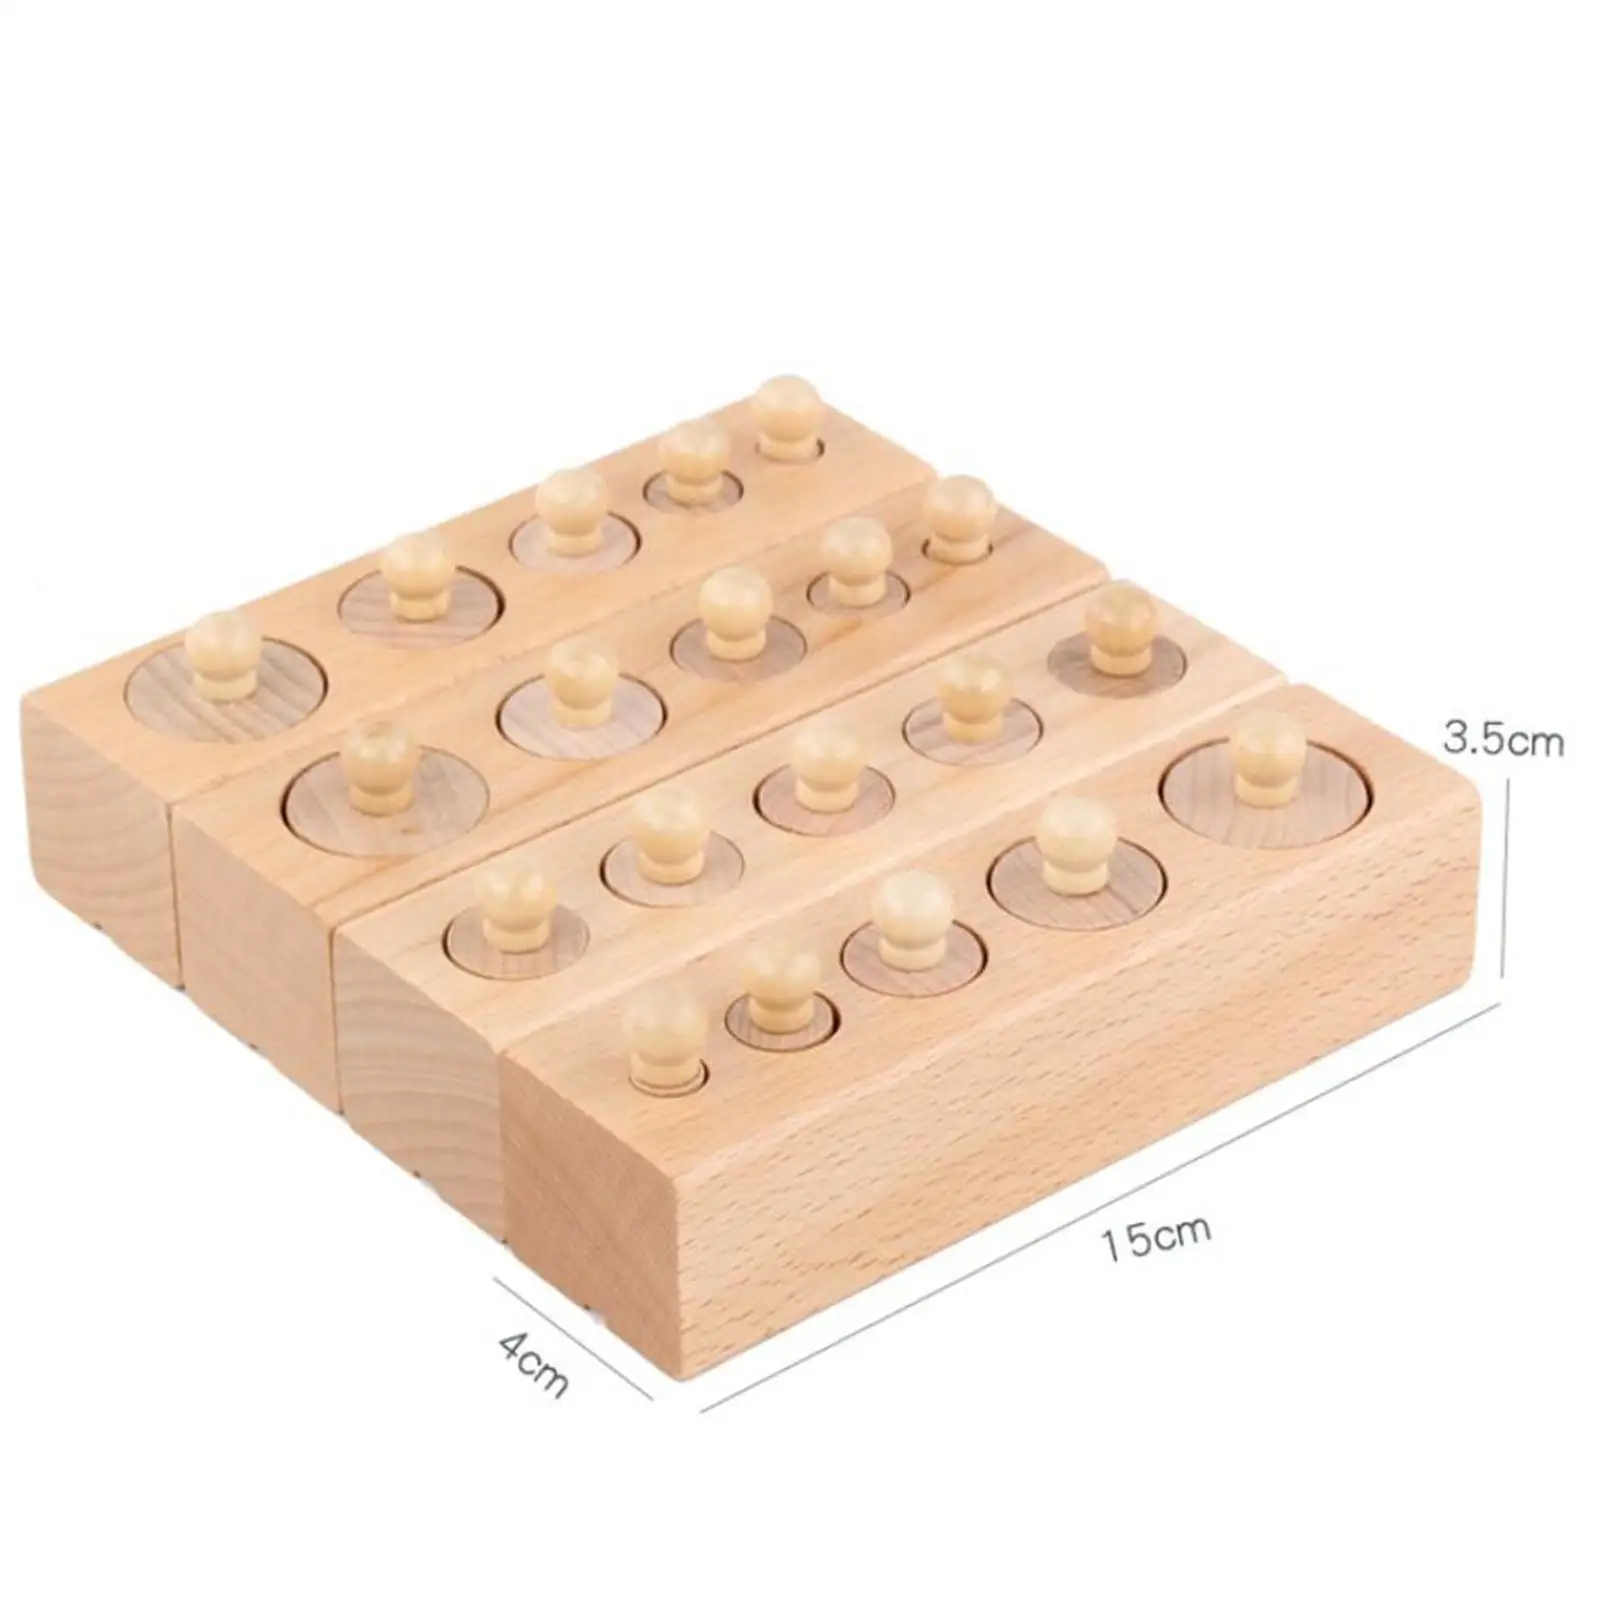 4x Wooden Knob Log Cylinder Blocks Board Game Patterning Educational Cylinder Ladder Blocks for Home Preschool Toys School Kids